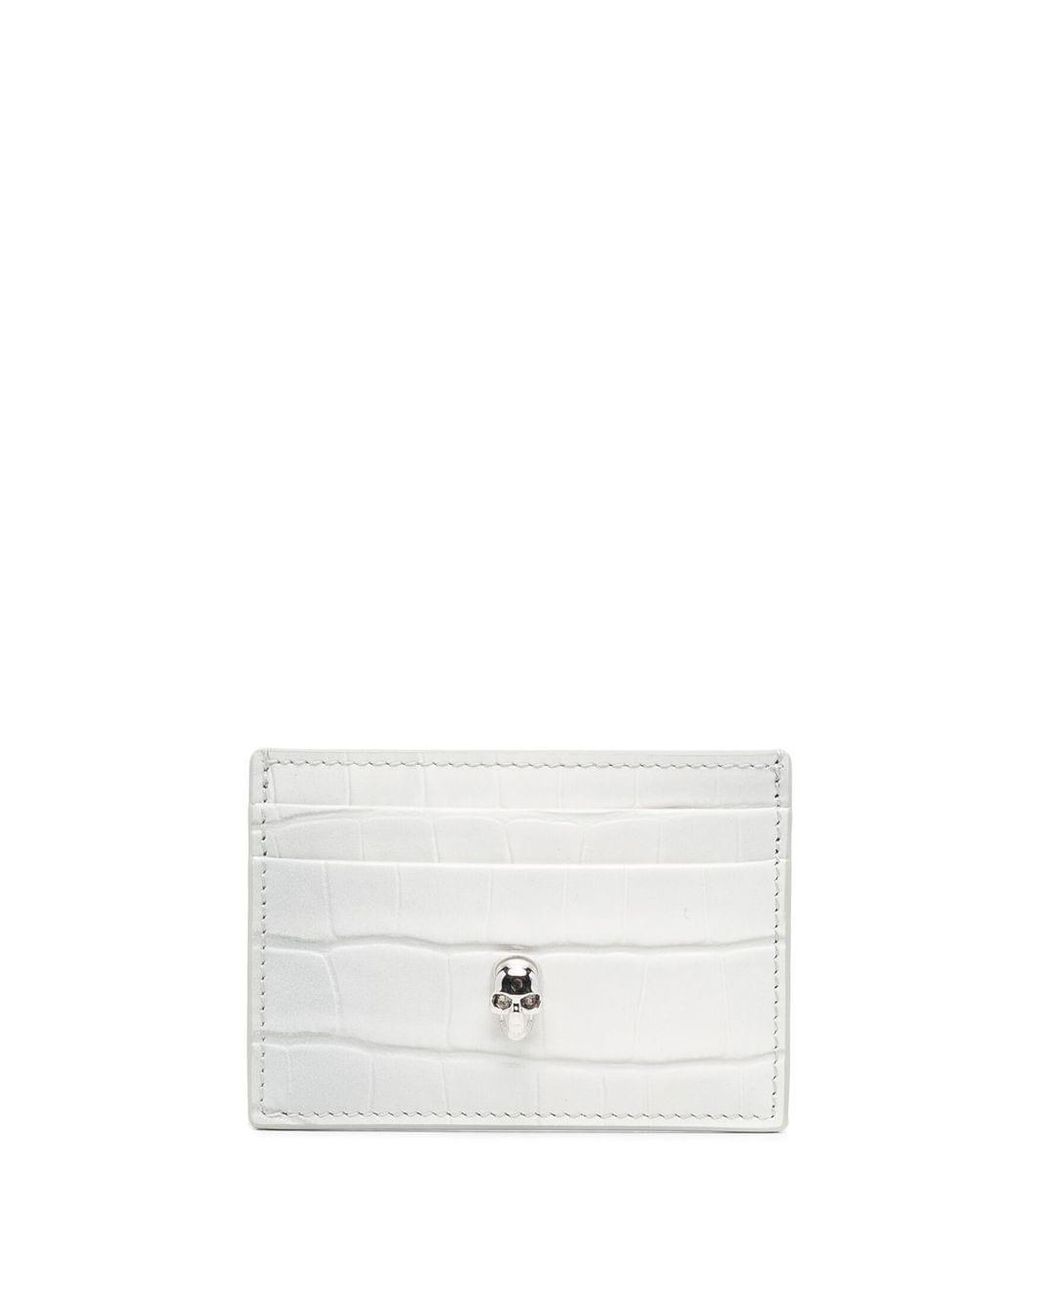 Alexander McQueen Wallets in Ivory/Grey (White) - Save 34% | Lyst